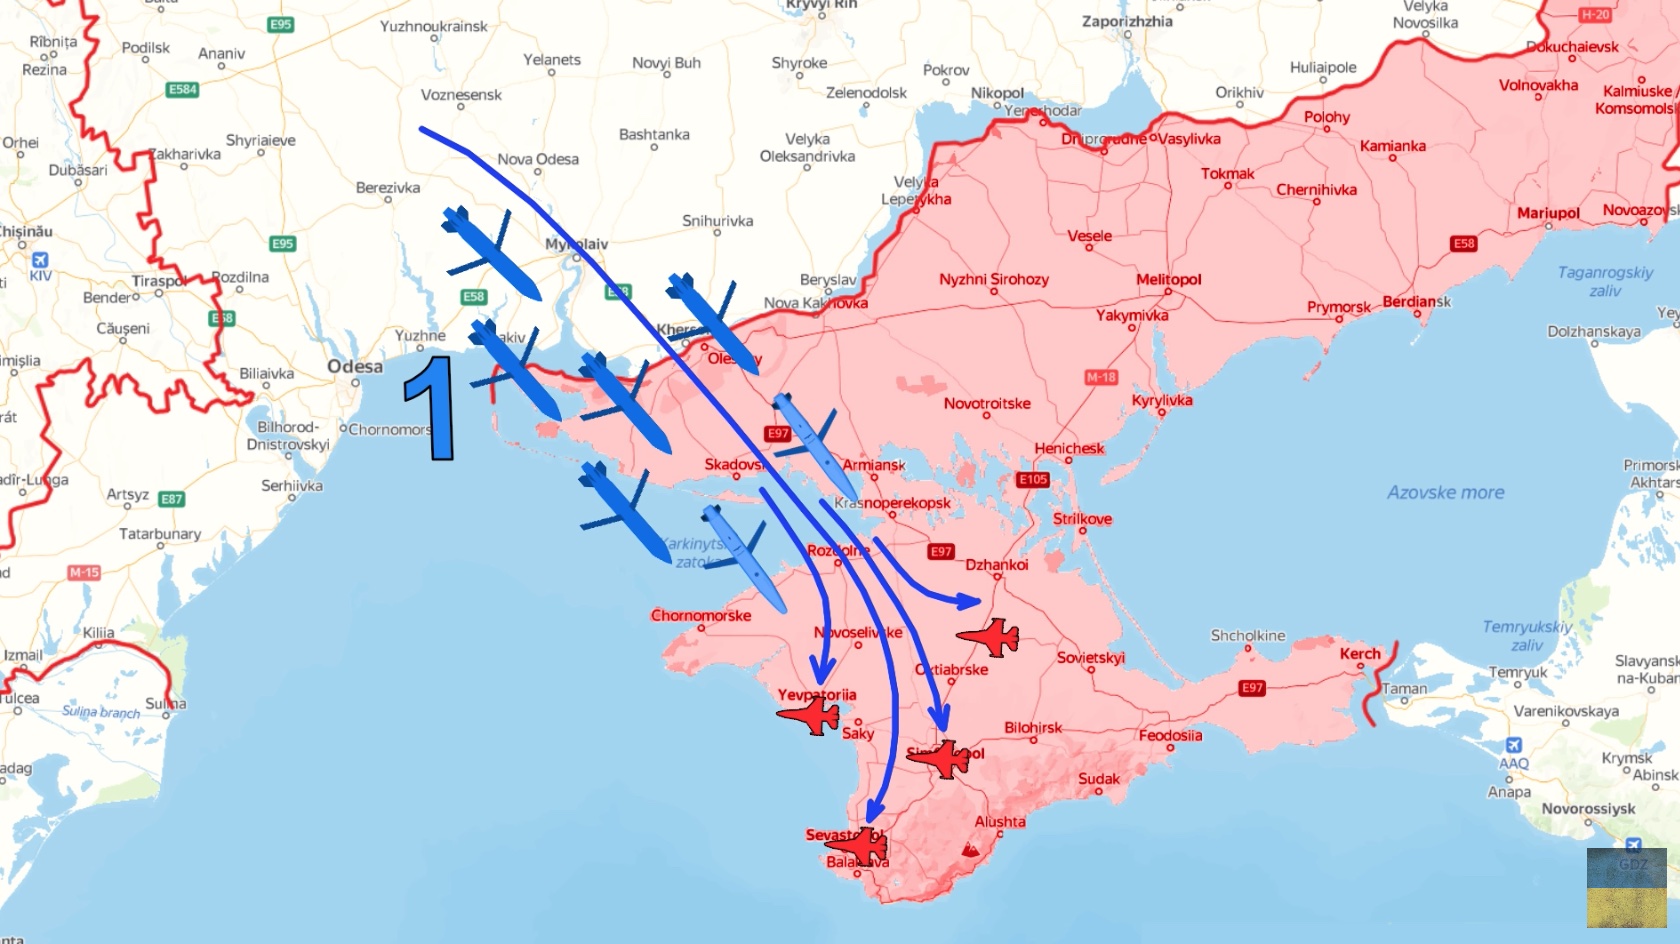 Storm Shadow strikes Crimea